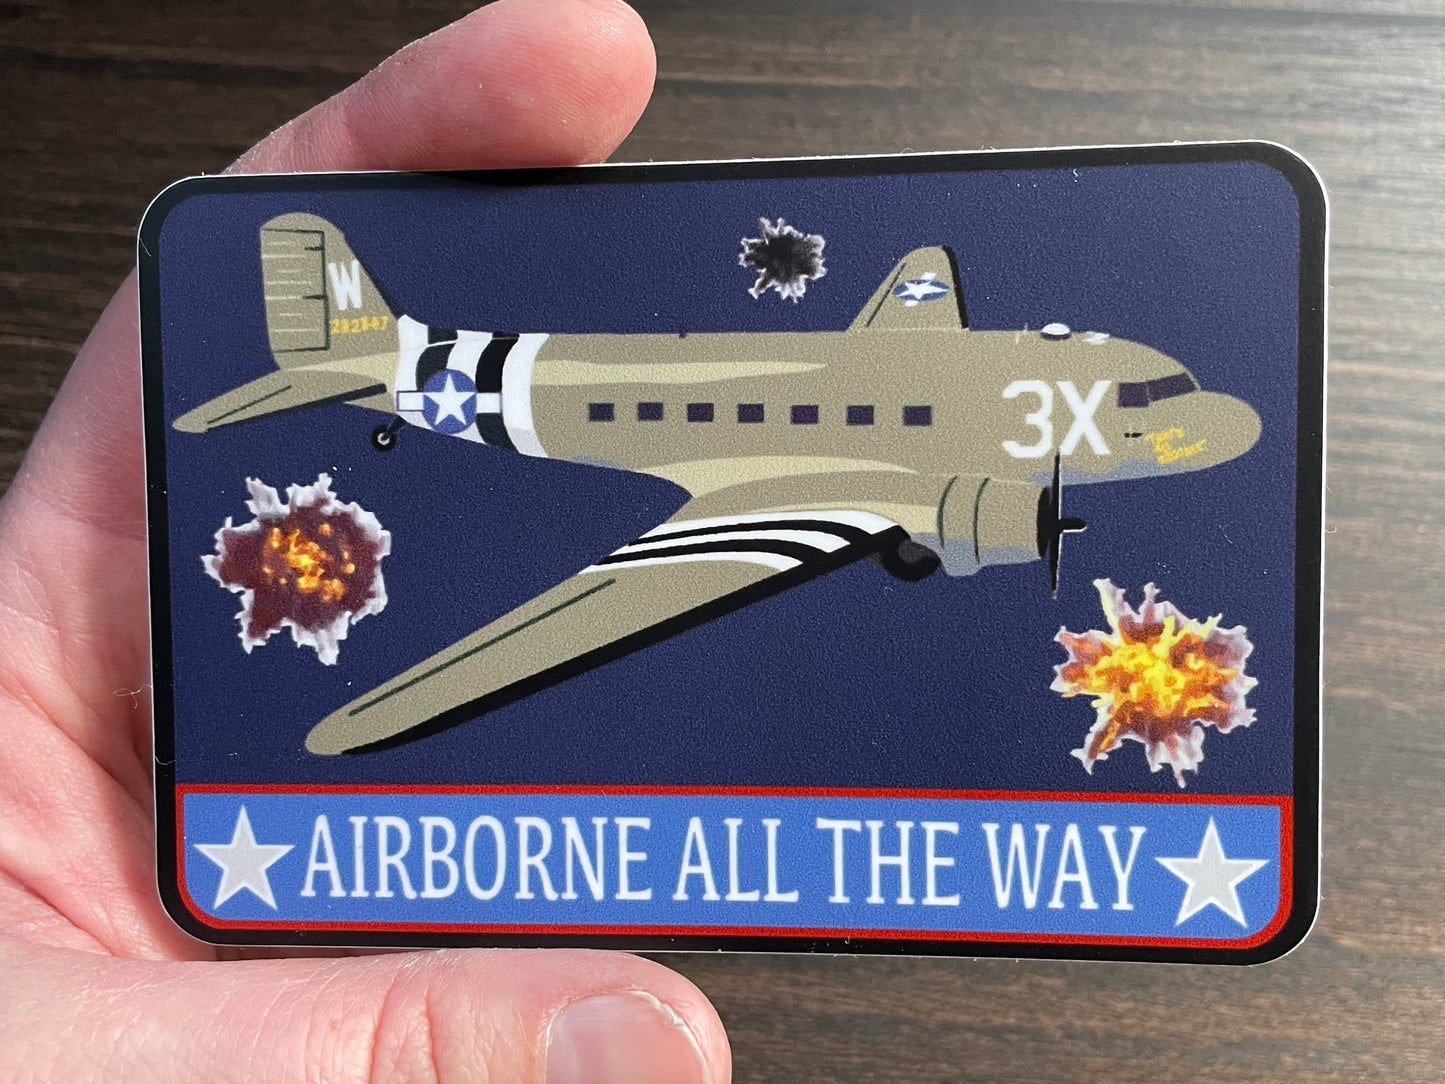 C47 Skytrain “Airborne All The Way” Sticker